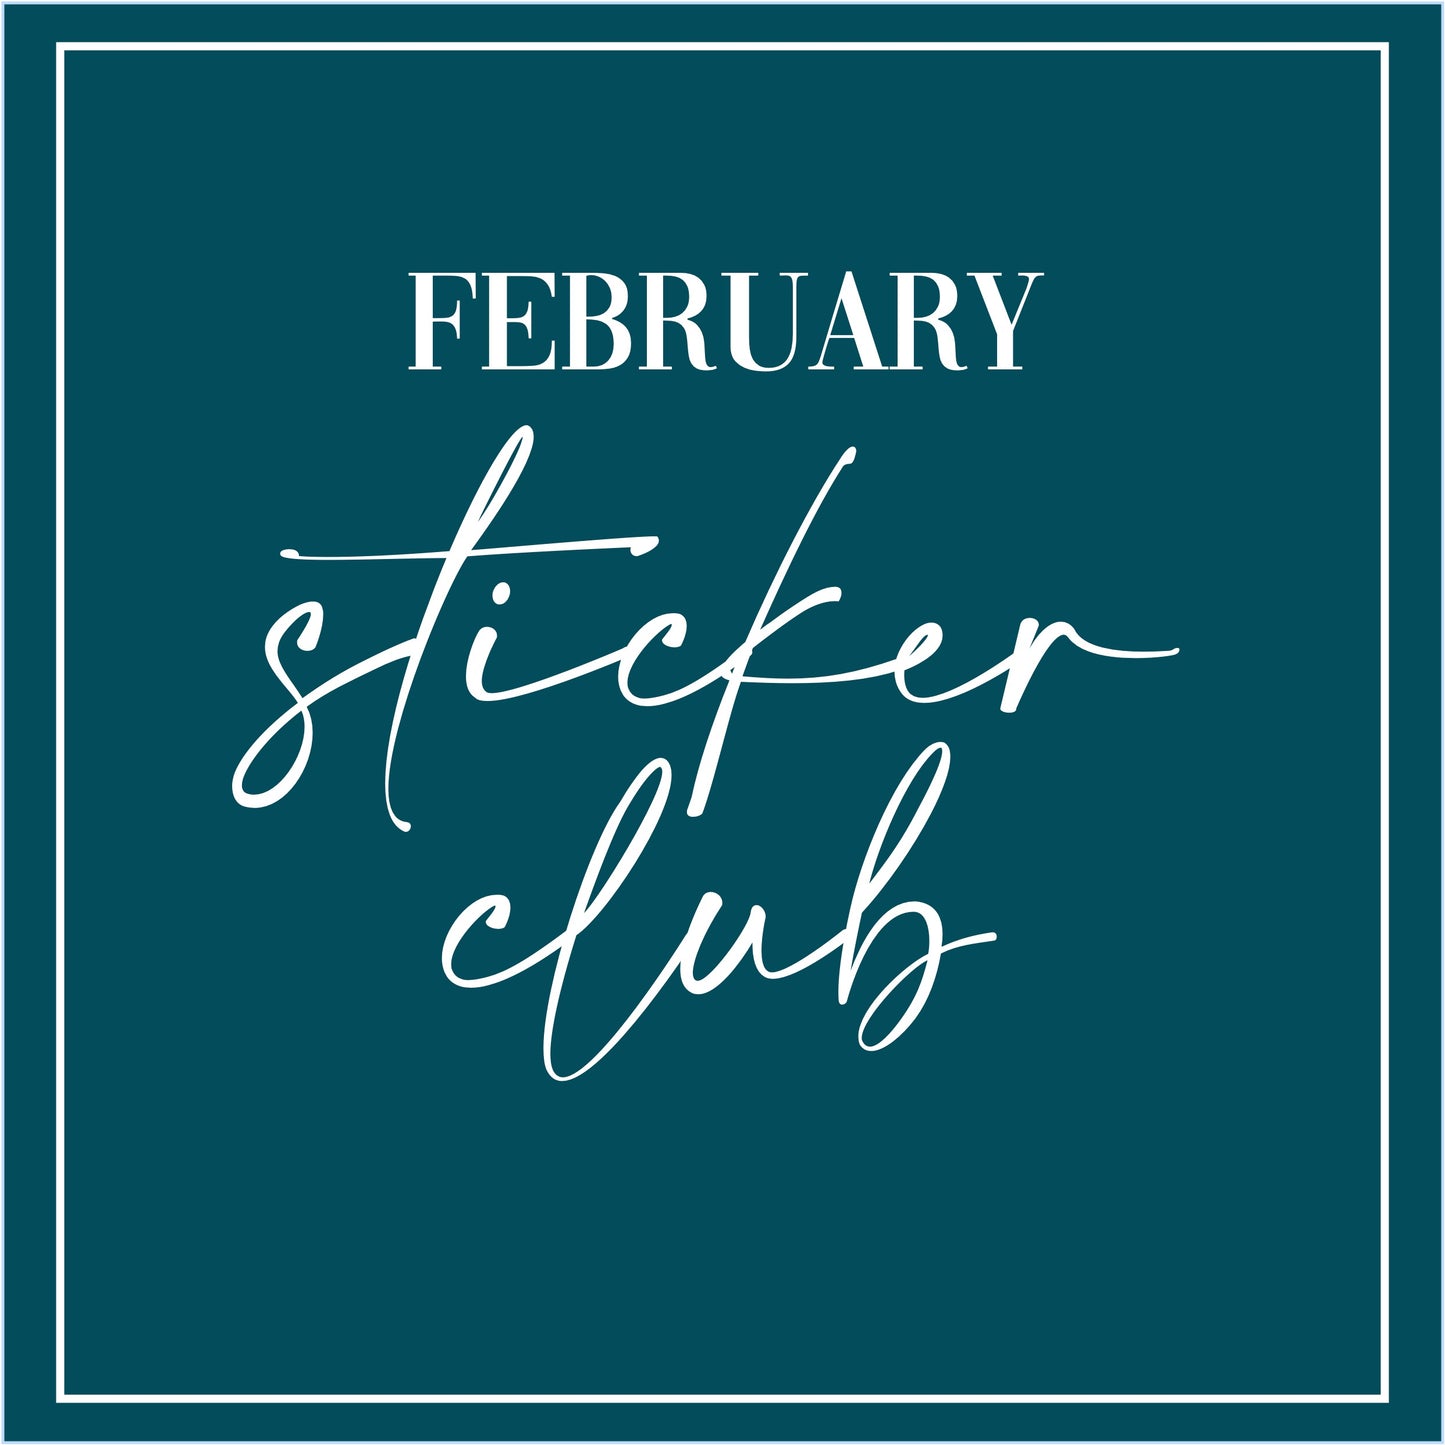 February - Sticker Club